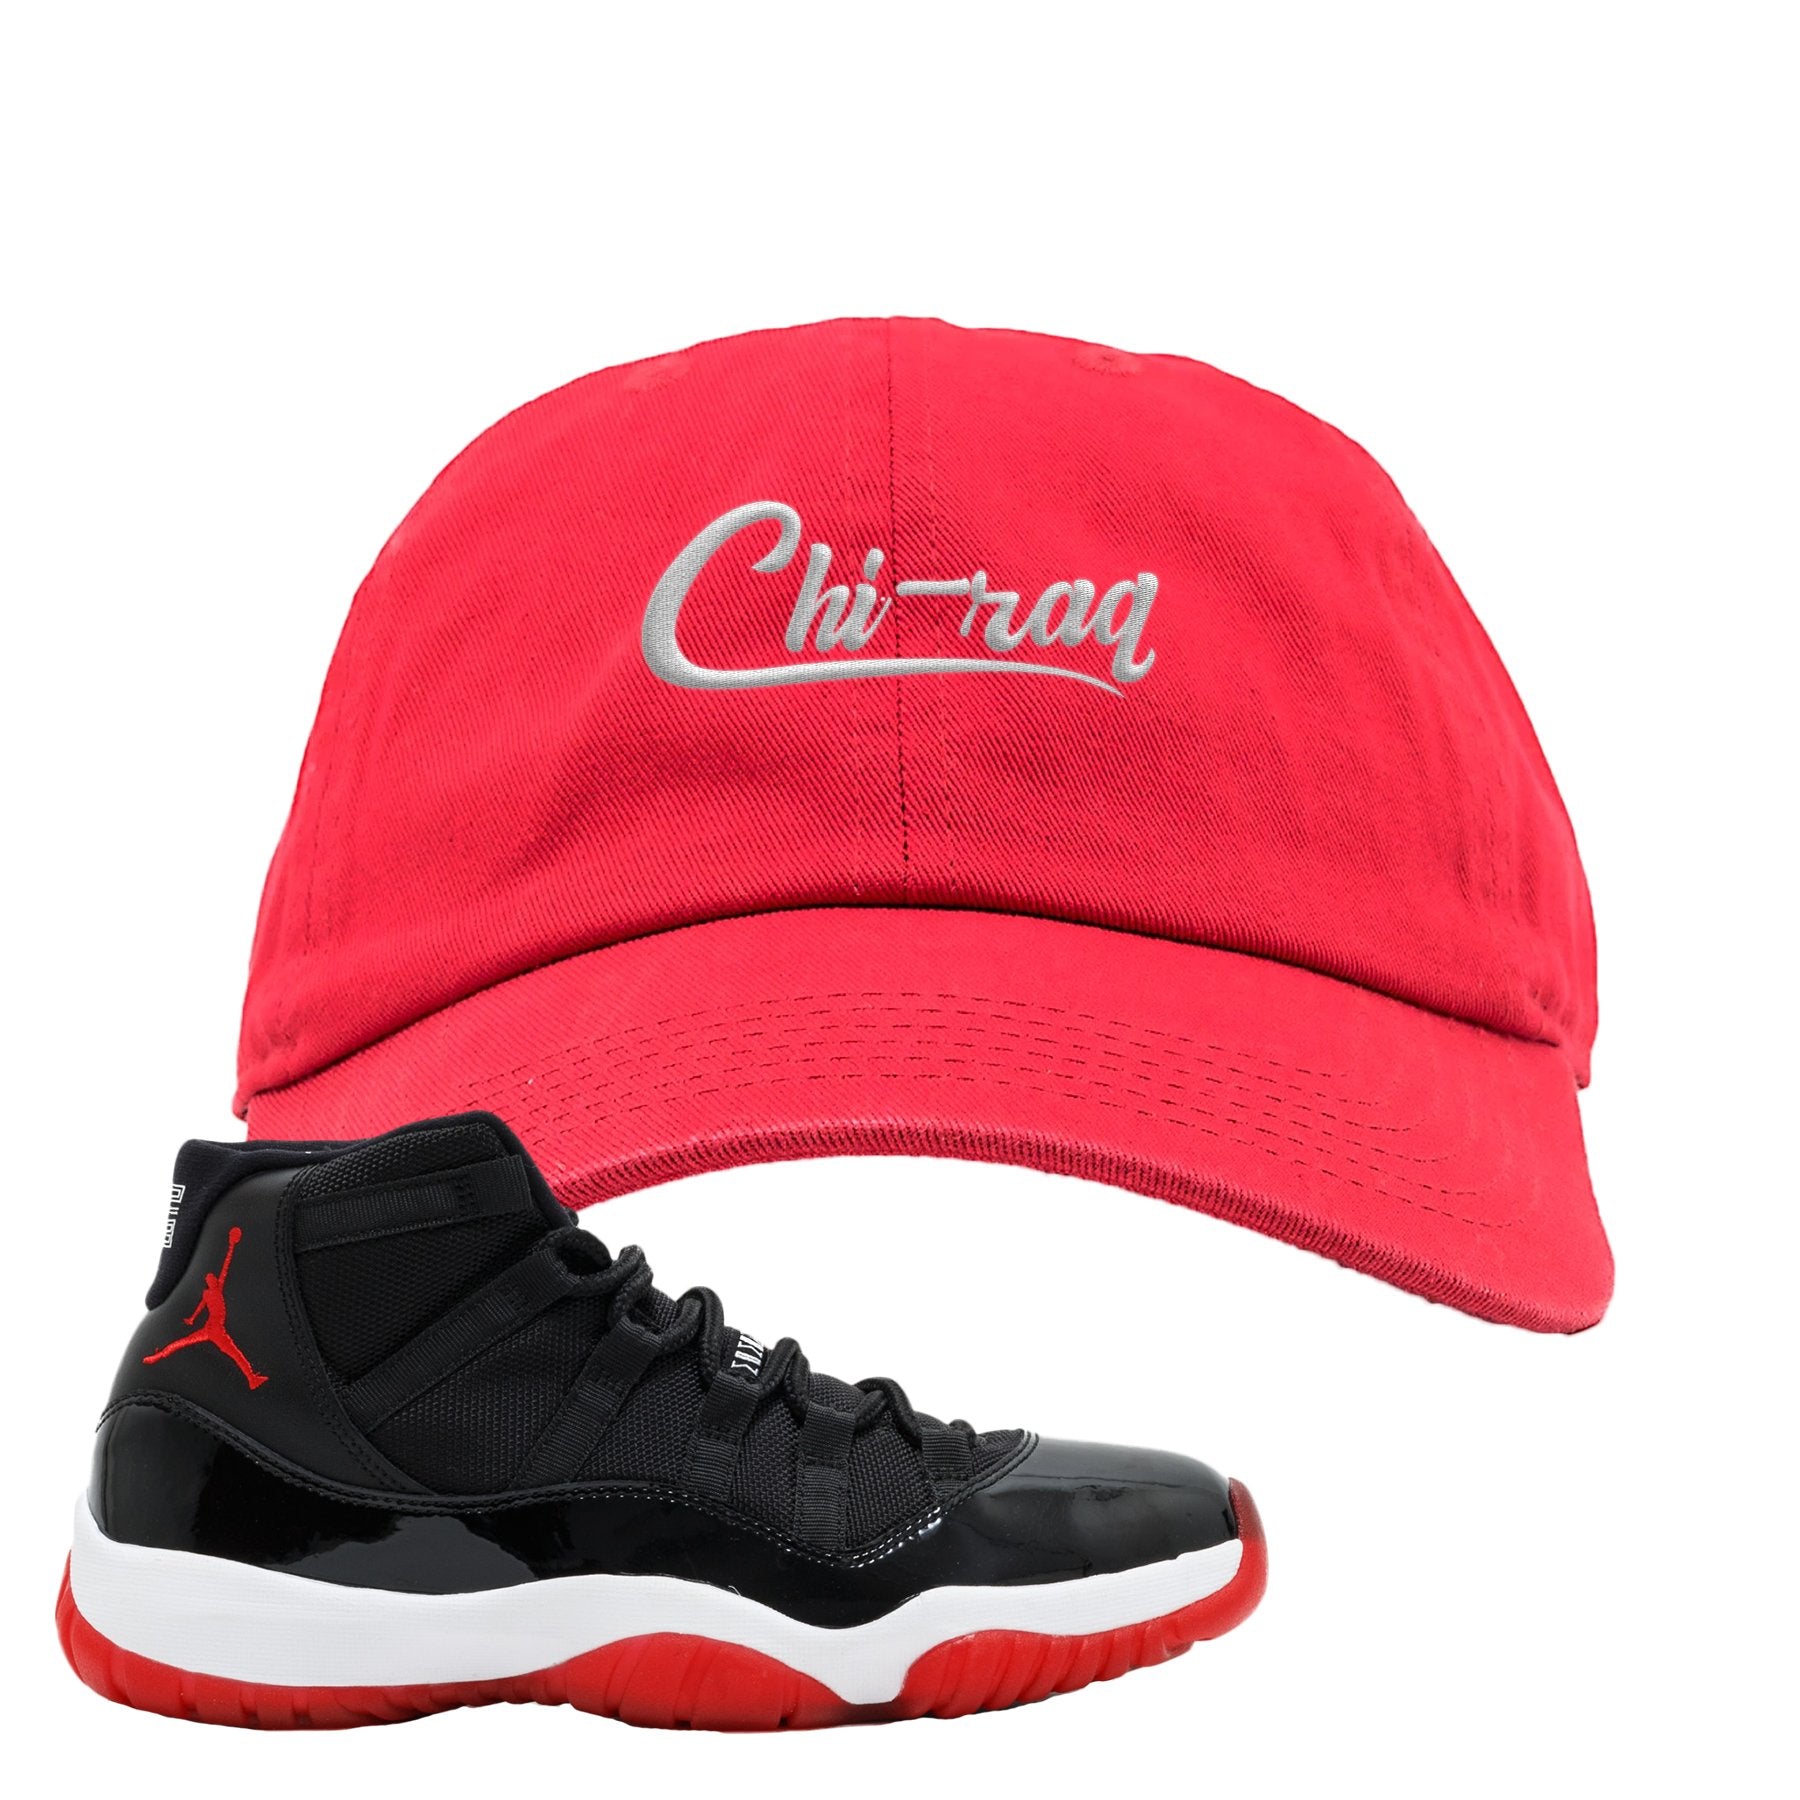 Jordan 11 Bred Chi-raq Red Sneaker Hook Up Dad Hat